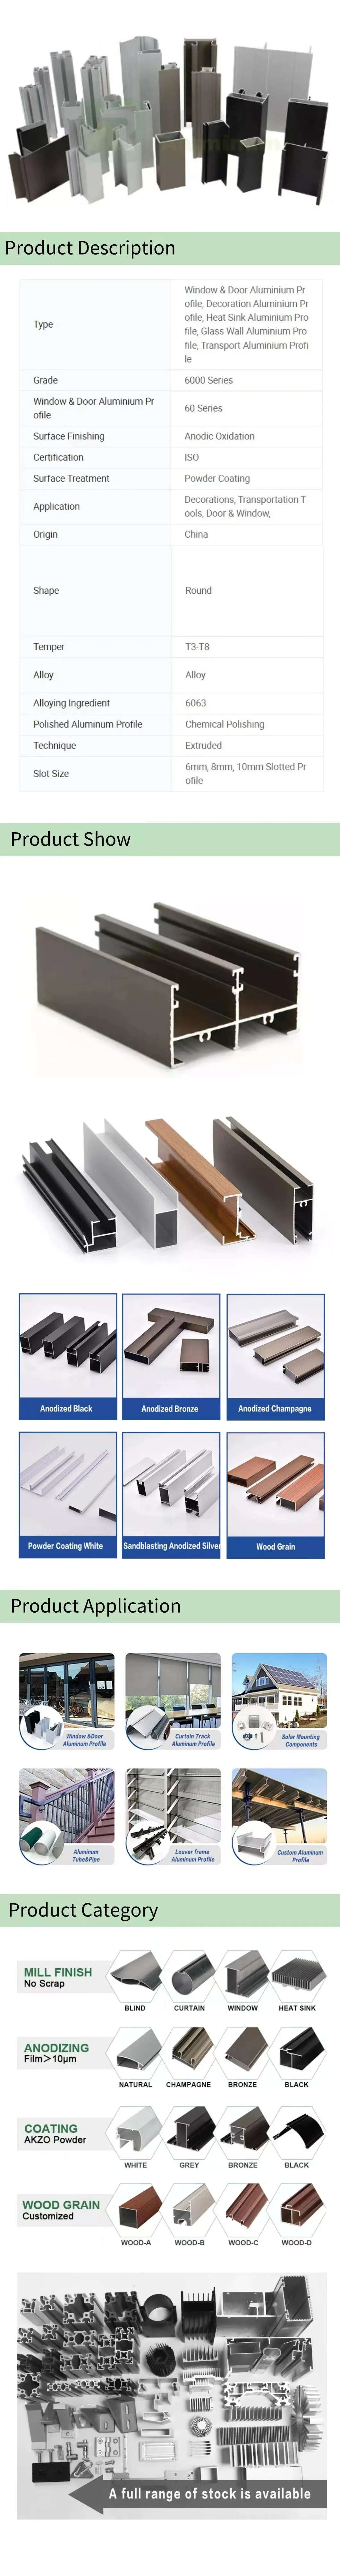 China Wholesale Aluminum Profiles for Heatsinks Metal Fabrication Parts LED Lamp Heat Sink